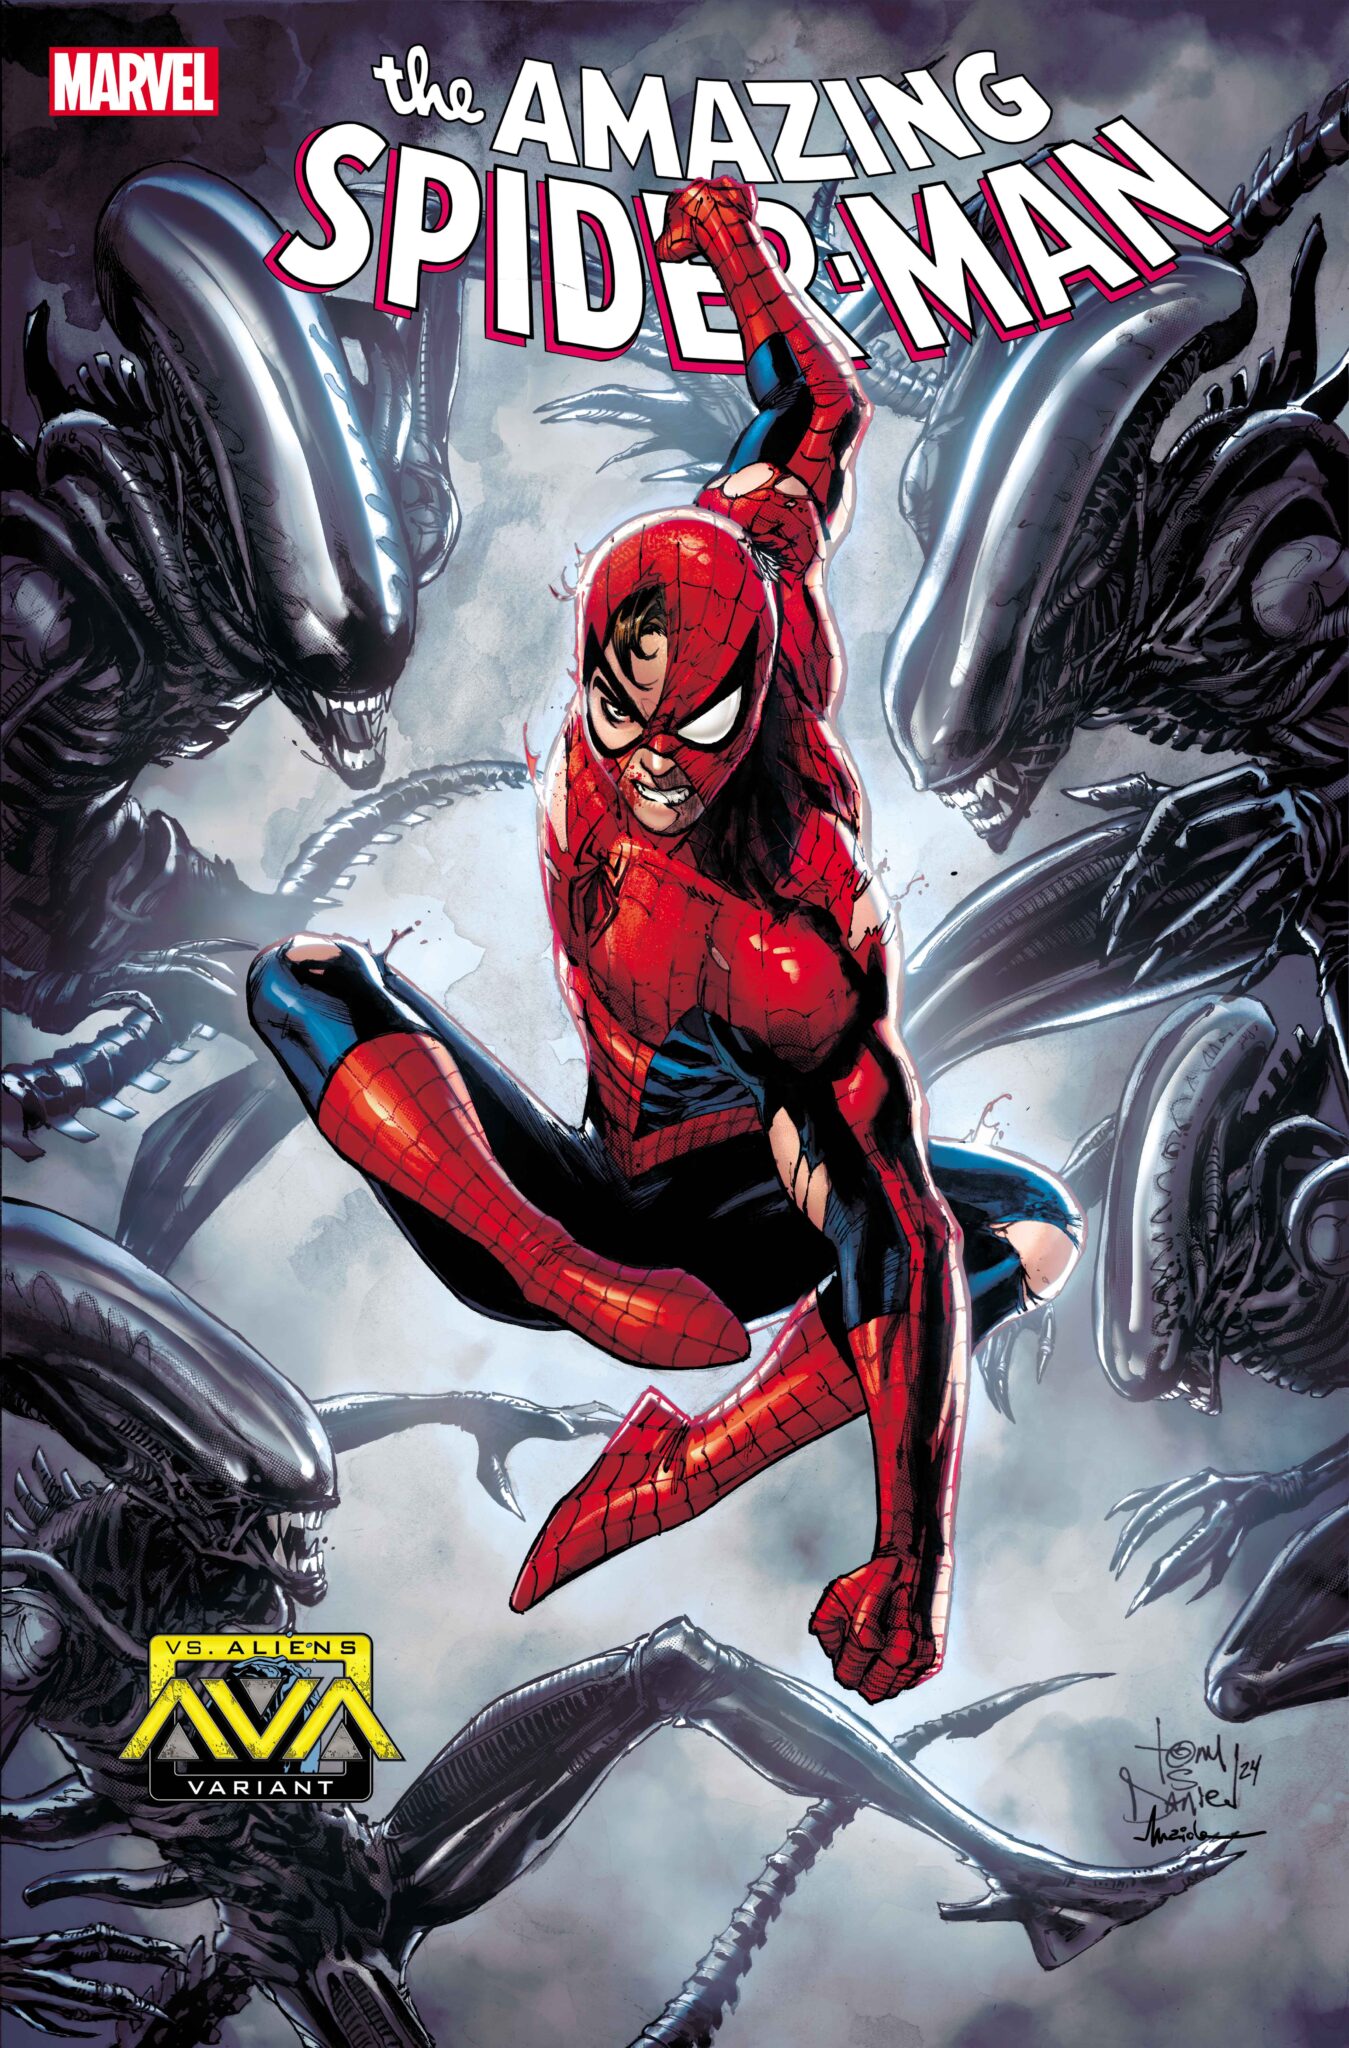 AMAZING SPIDER-MAN #53 MARVEL VS. ALIEN VARIANT COVER BY TONY DANIEL 